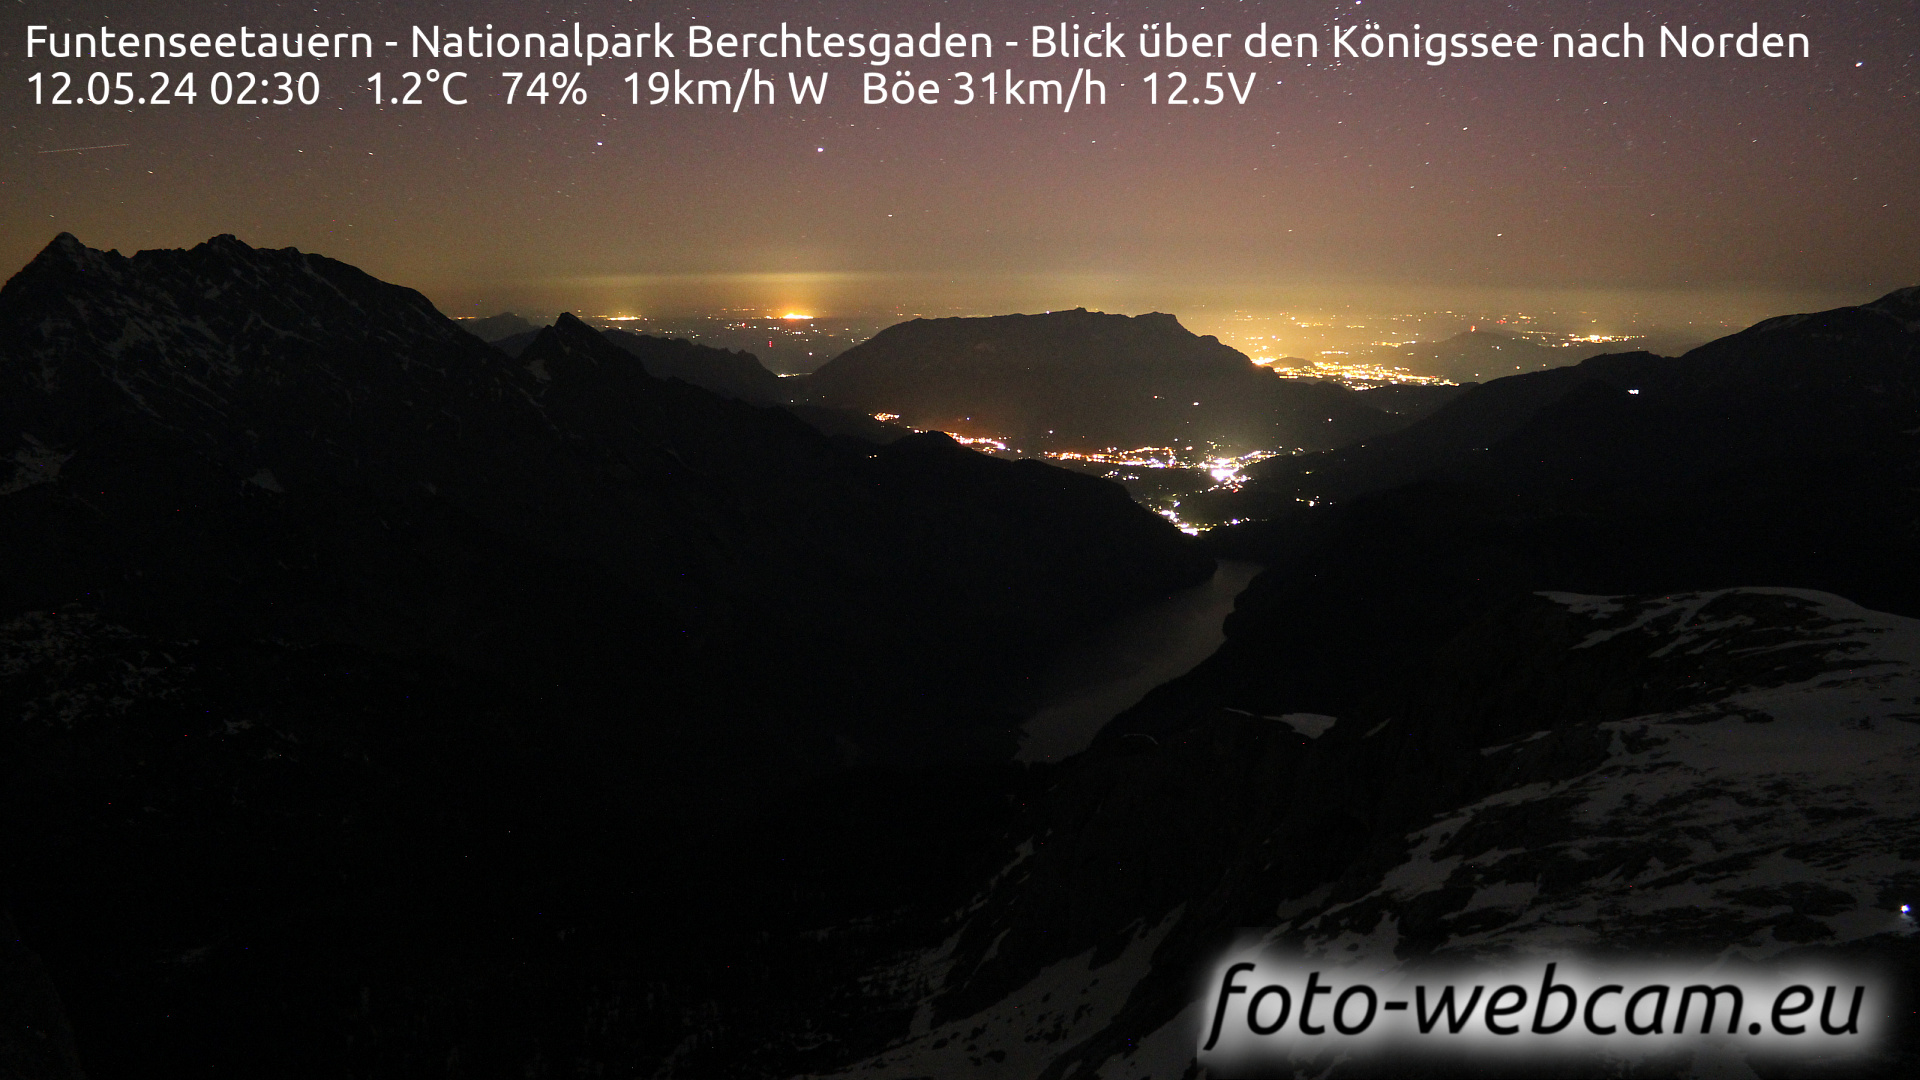 Berchtesgaden Jue. 02:48